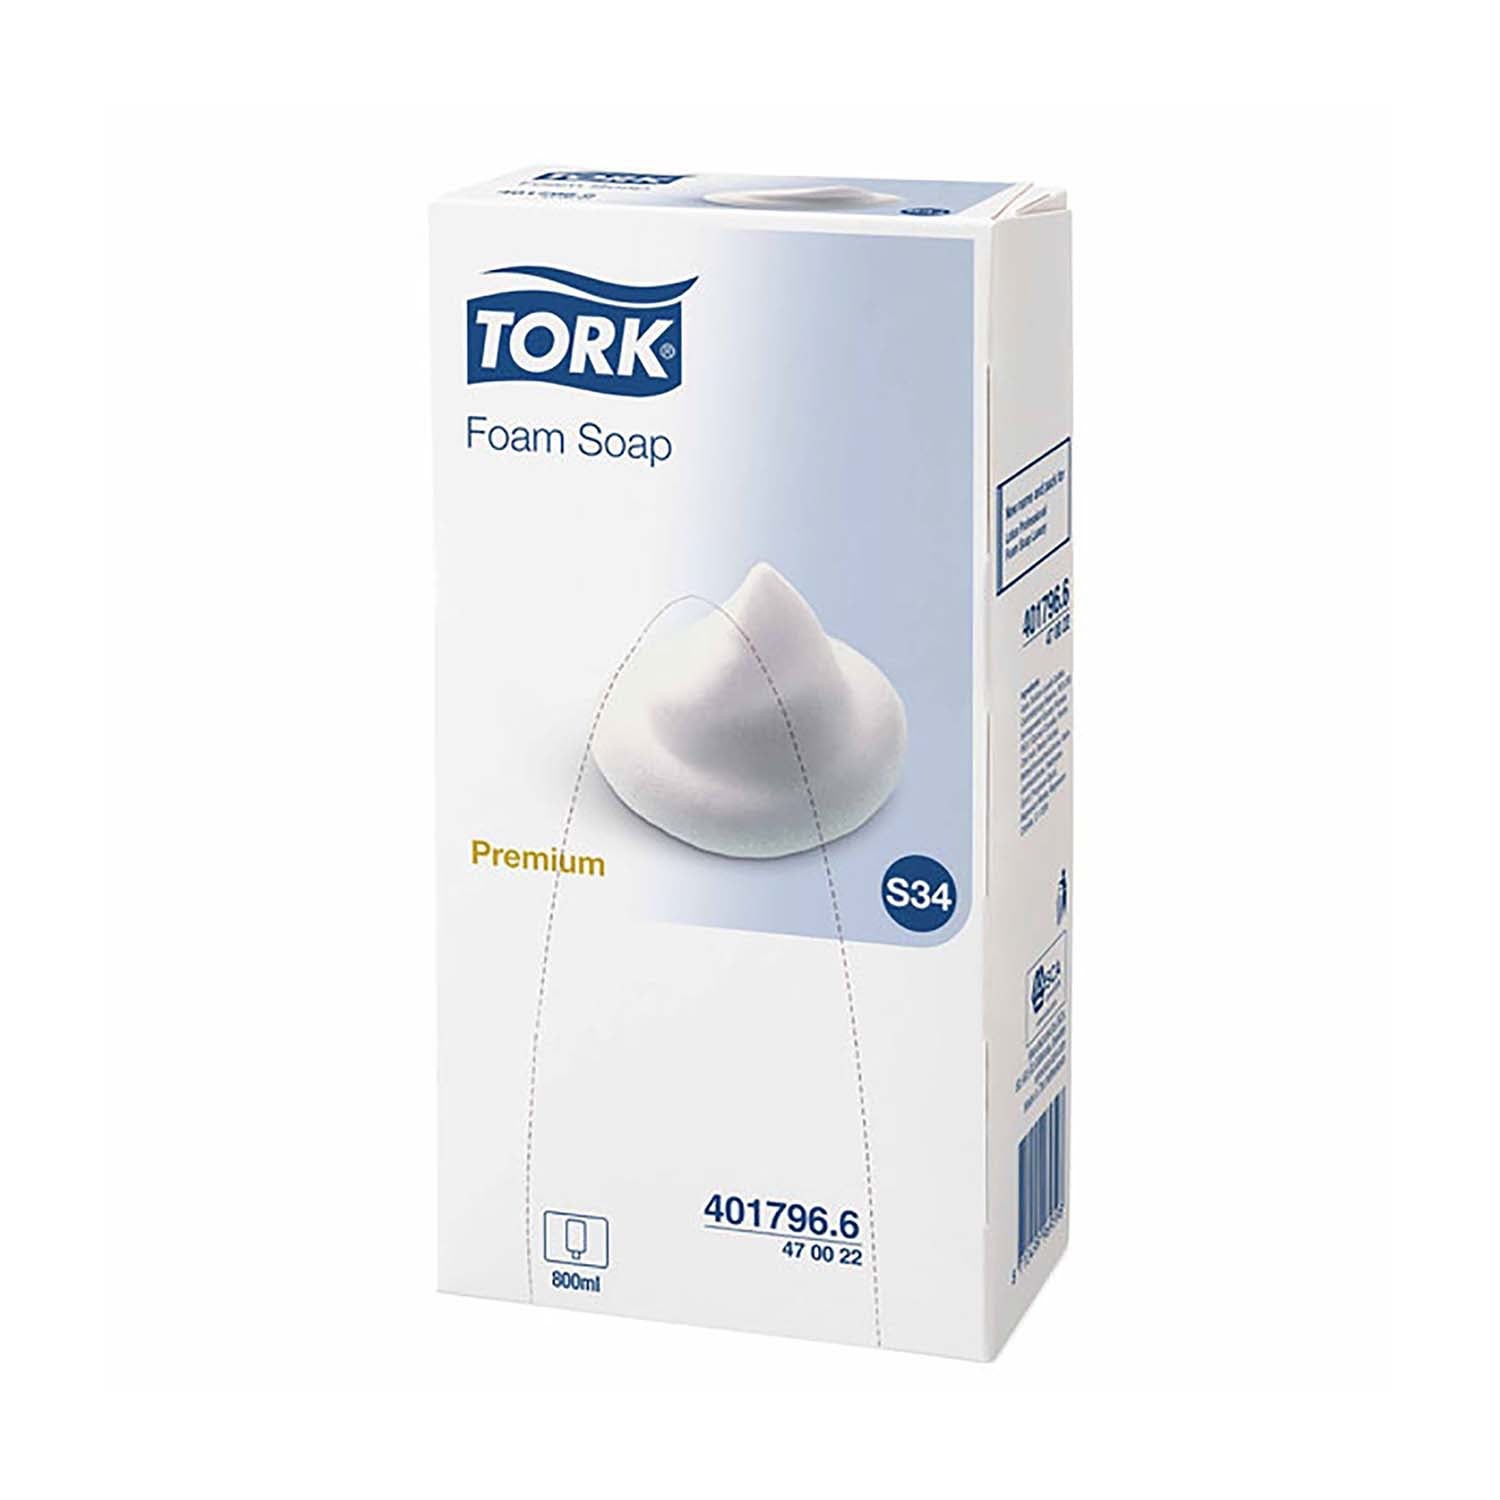 Tork Premium Foam Soap | 80ml